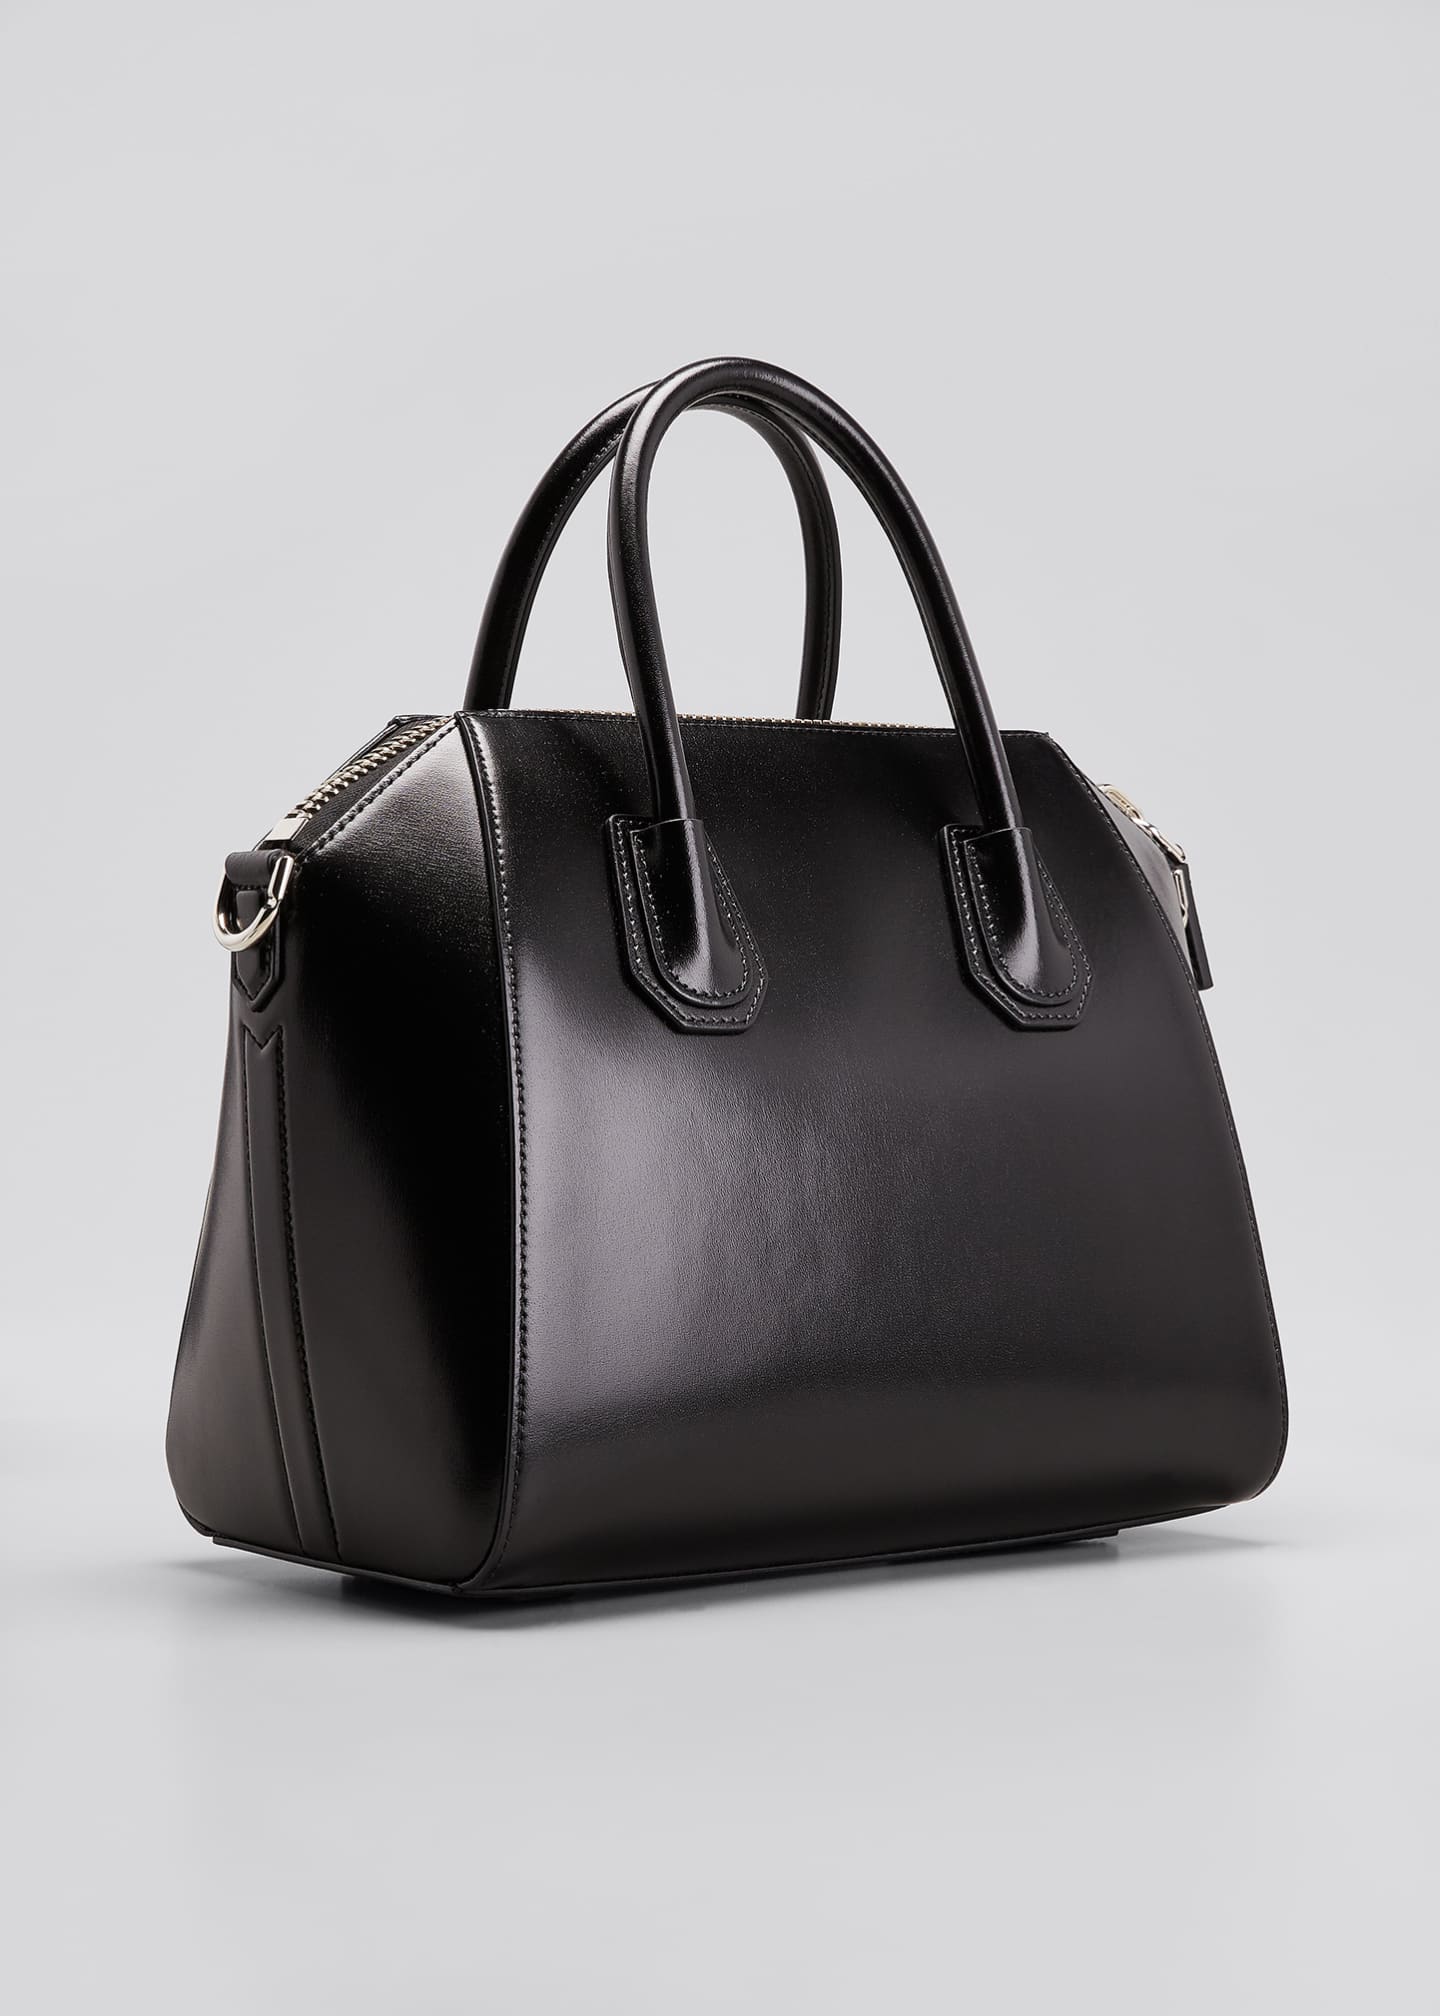 Givenchy Antigona Small Leather Bag - Bergdorf Goodman